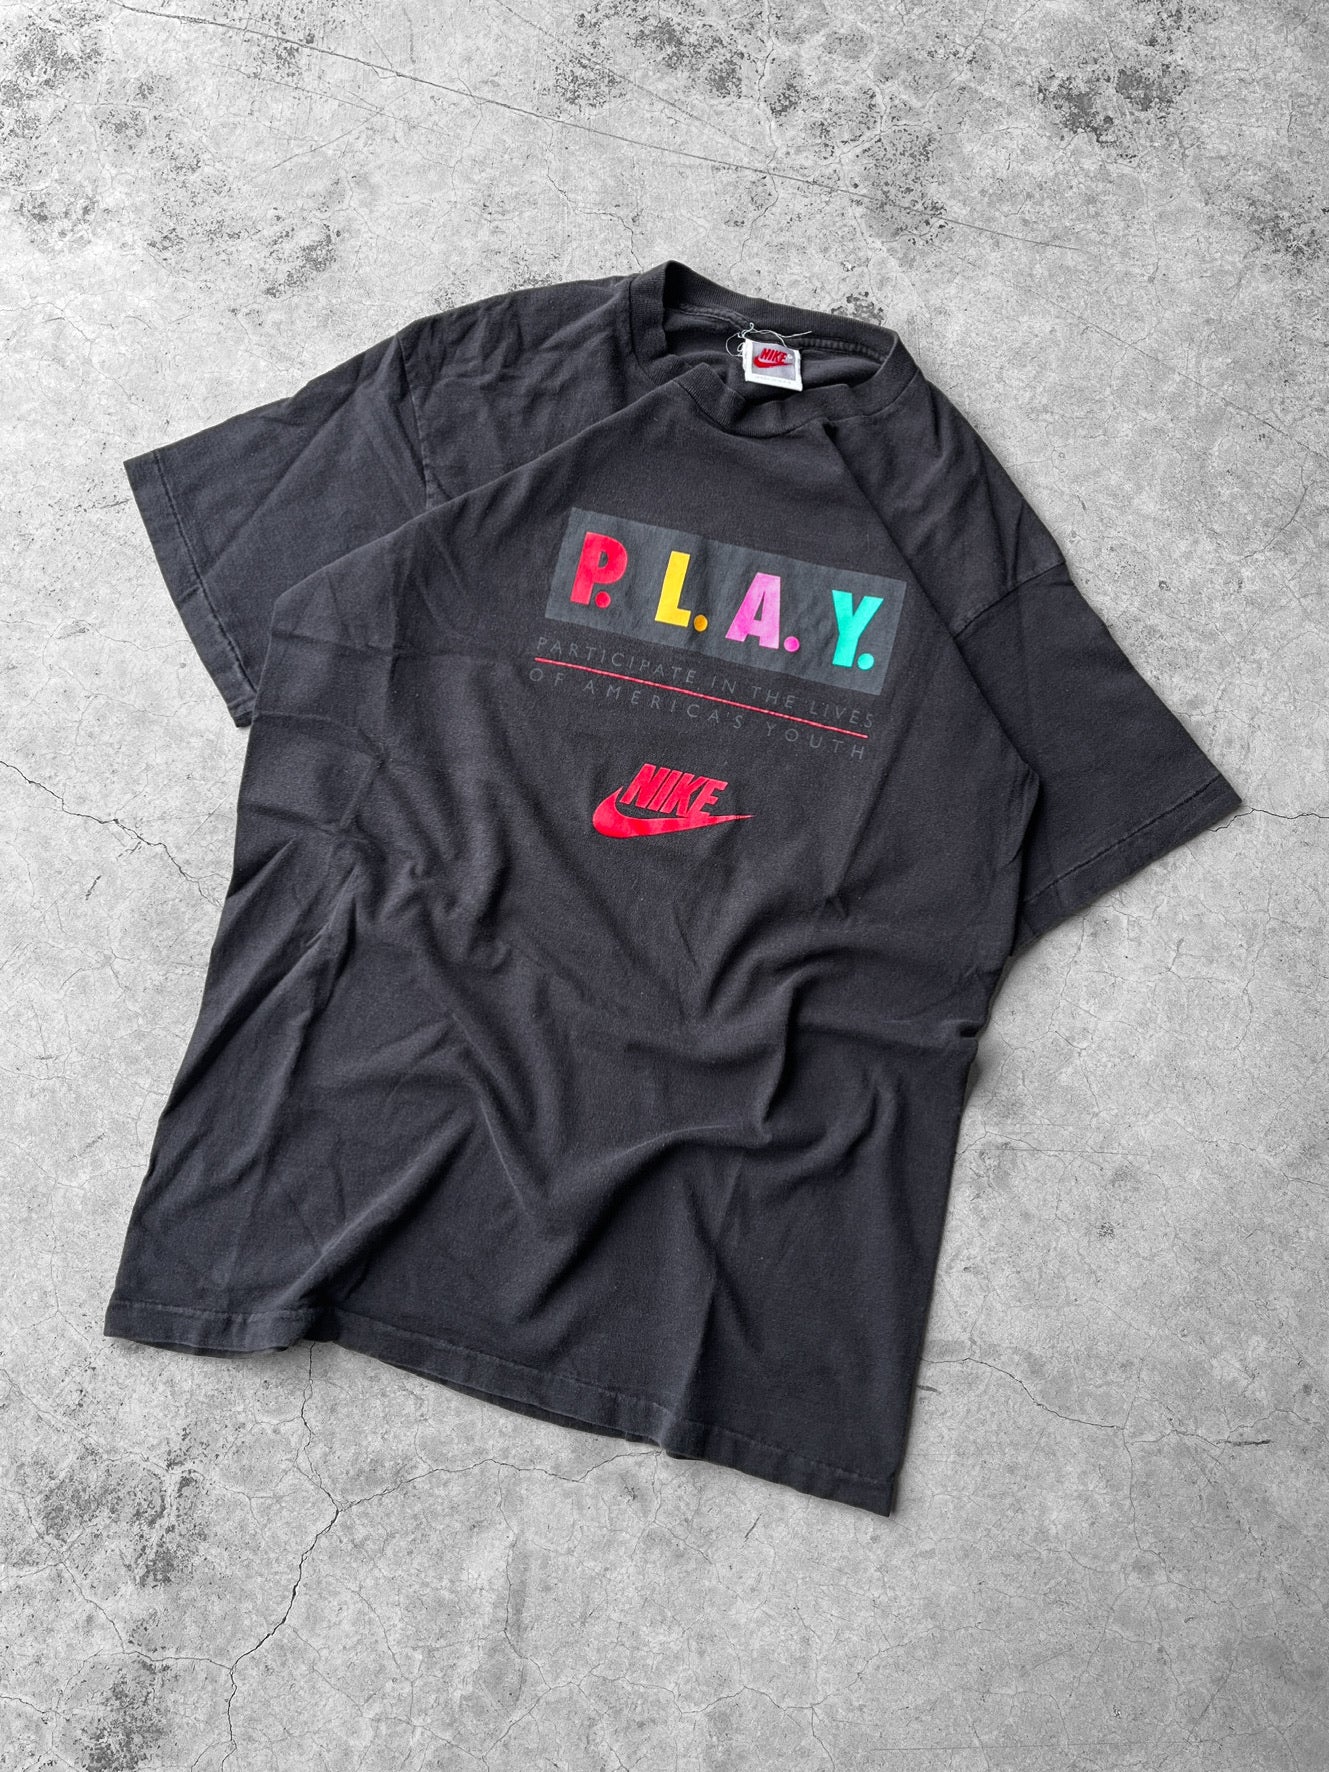 Nike Swoosh Spike Lee PLAY Shirt - S